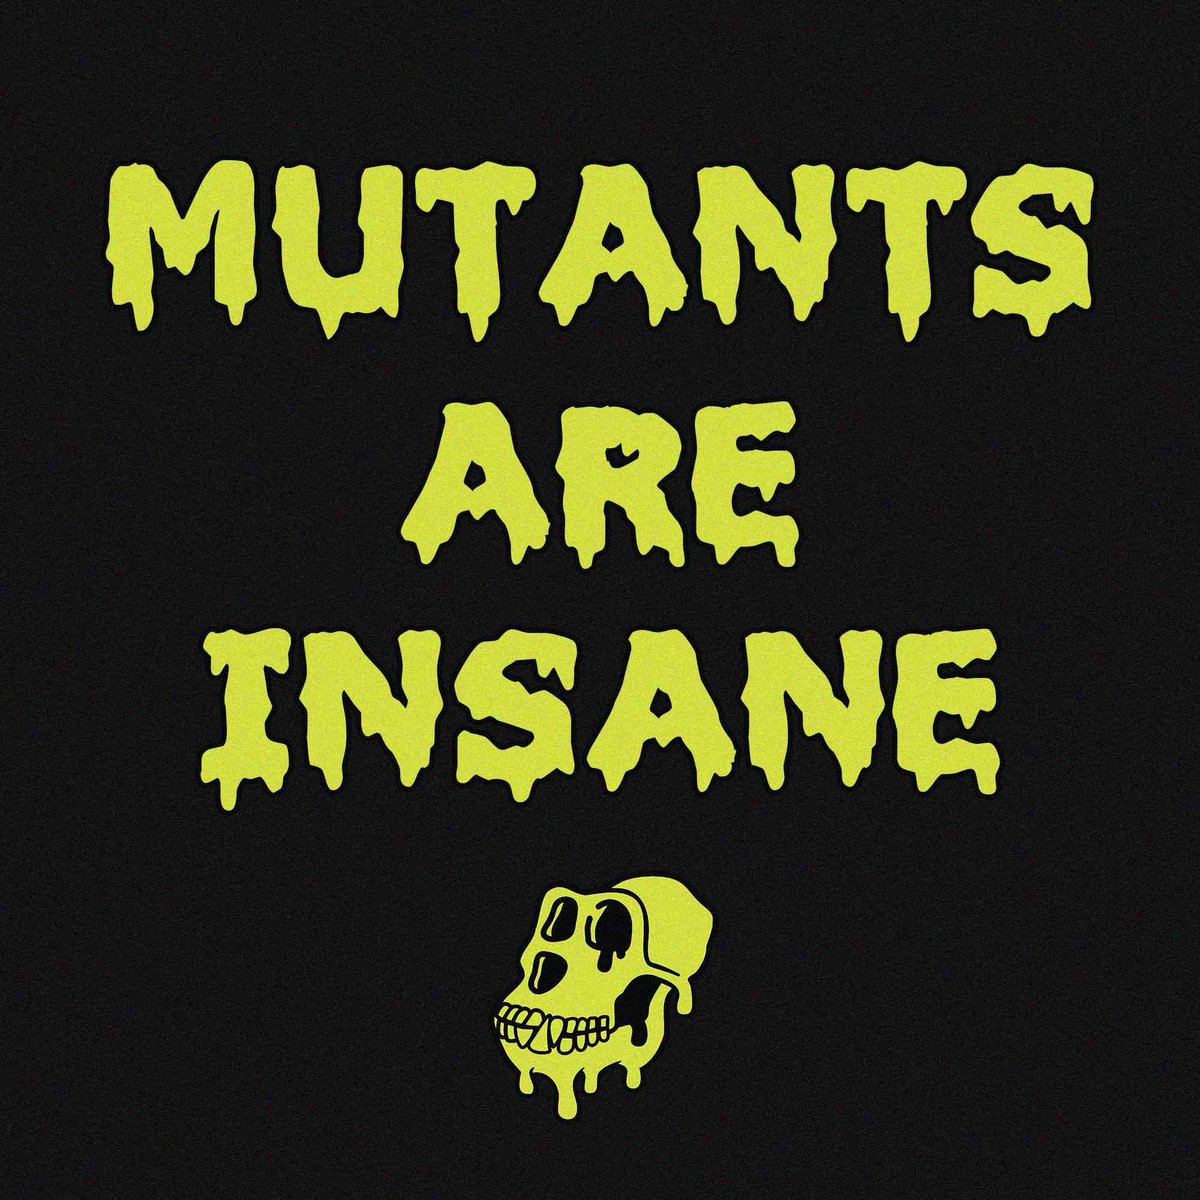 Gm 𓃵☀️ 
& 
Happy Mutant Monday 🧪🦾🦍🍌🫶

#MutantApeYachtClub #Ironmayc #Gm #HMM #Insane 

𝐌𝐮𝐭𝐚𝐧𝐭𝐬 𝐚𝐫𝐞 𝐢𝐧𝐬𝐚𝐧𝐞 !